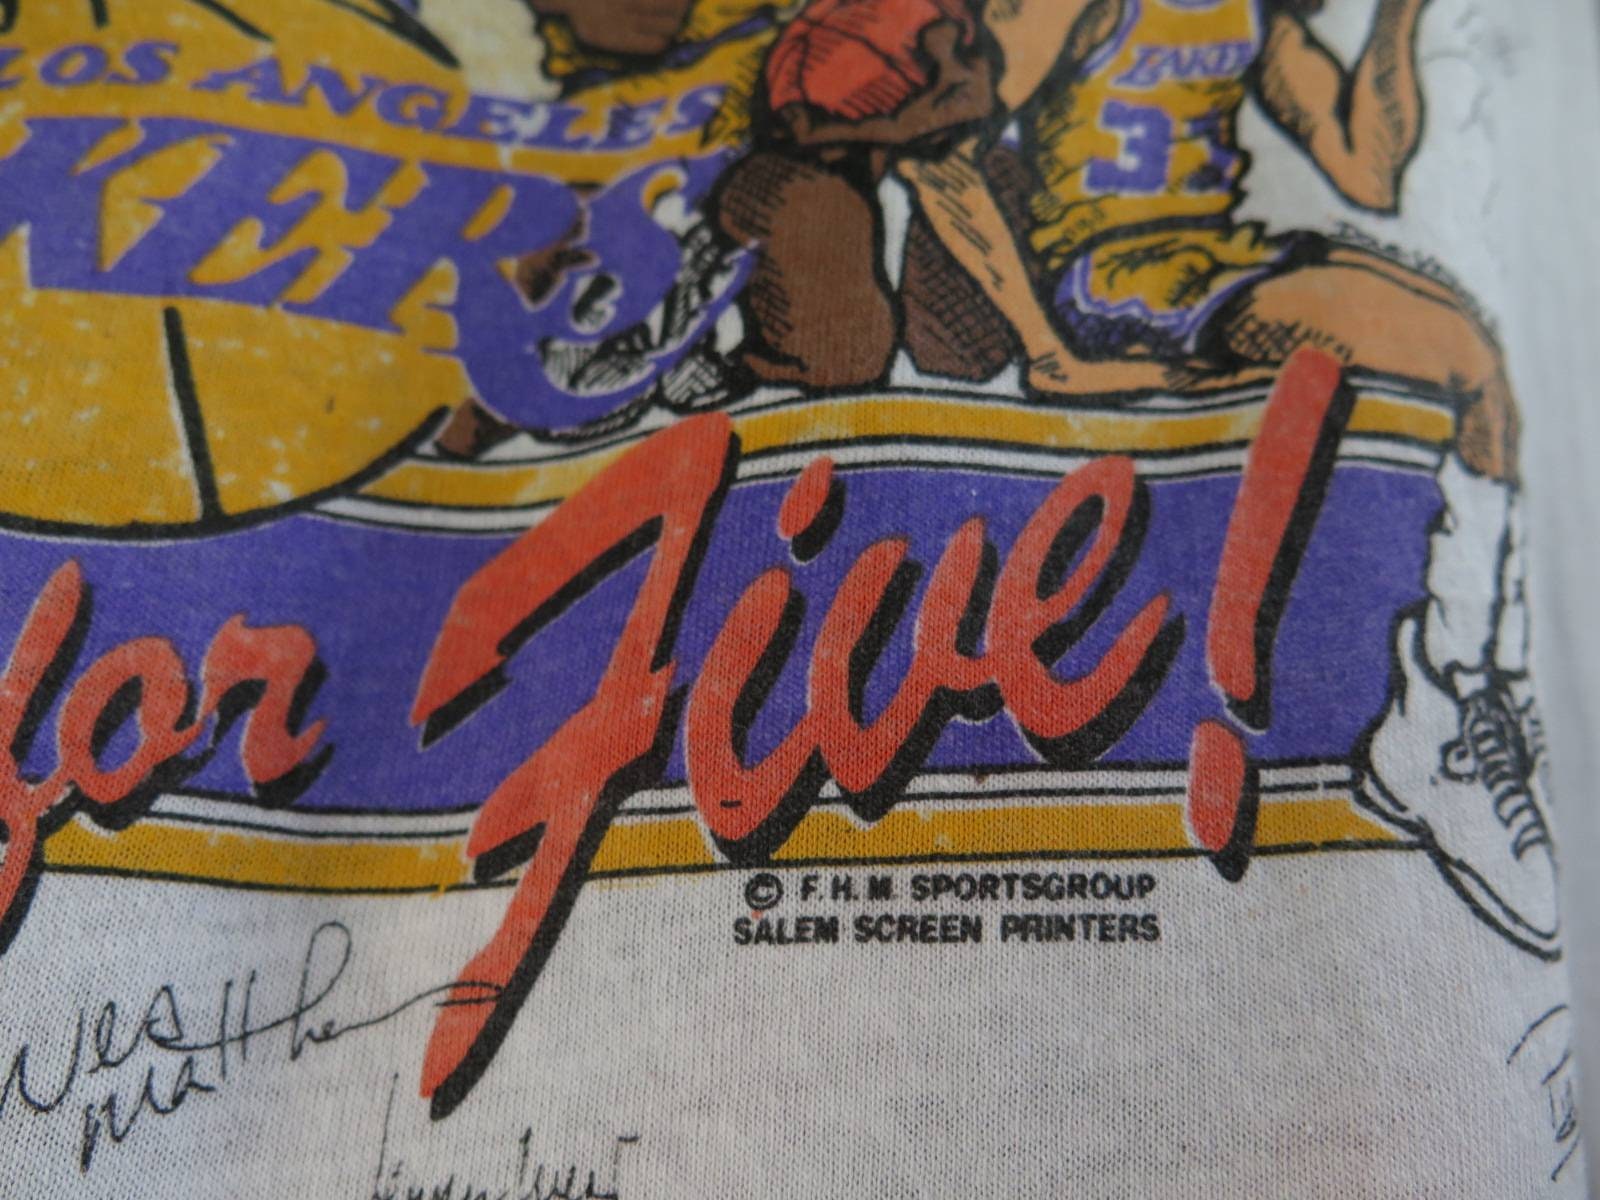 VTG 80s NBA ALL-STAR 1987 CARICATURE T-SHIRT SALME SCREEN PRINTERS